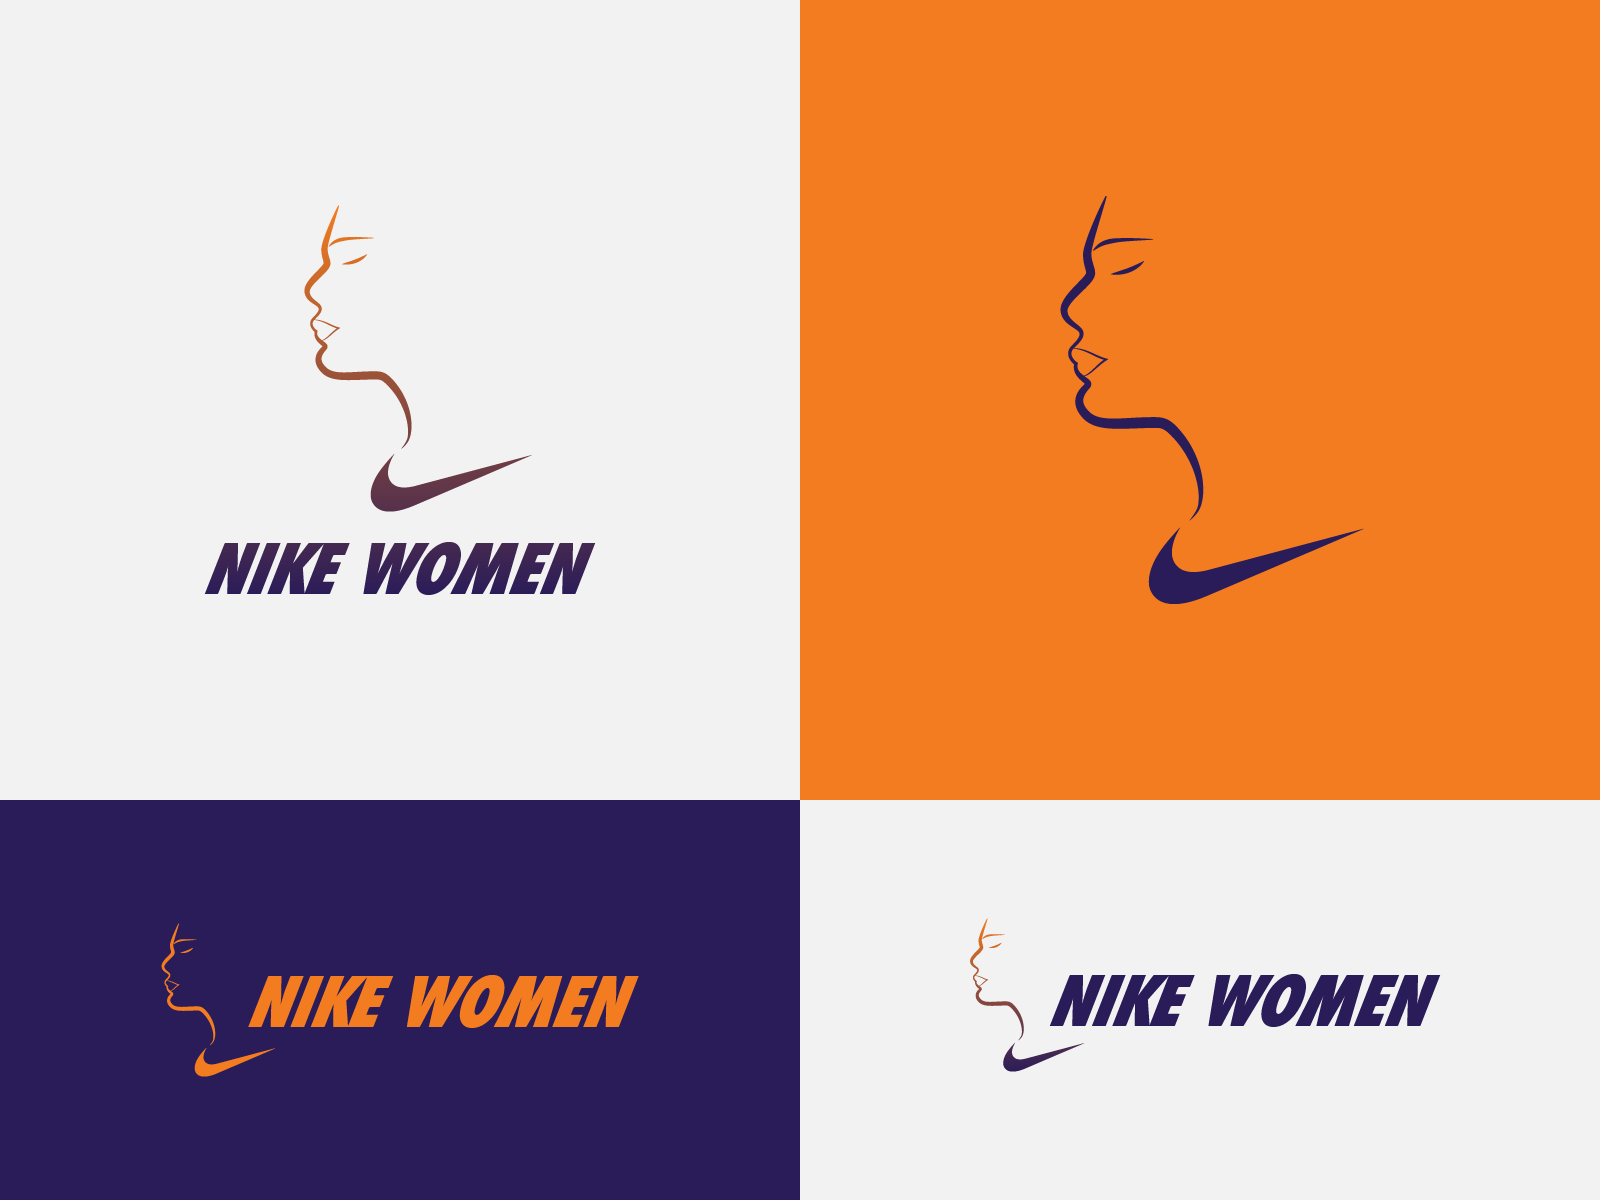 Nike Women - proposal by Helvetiphant 